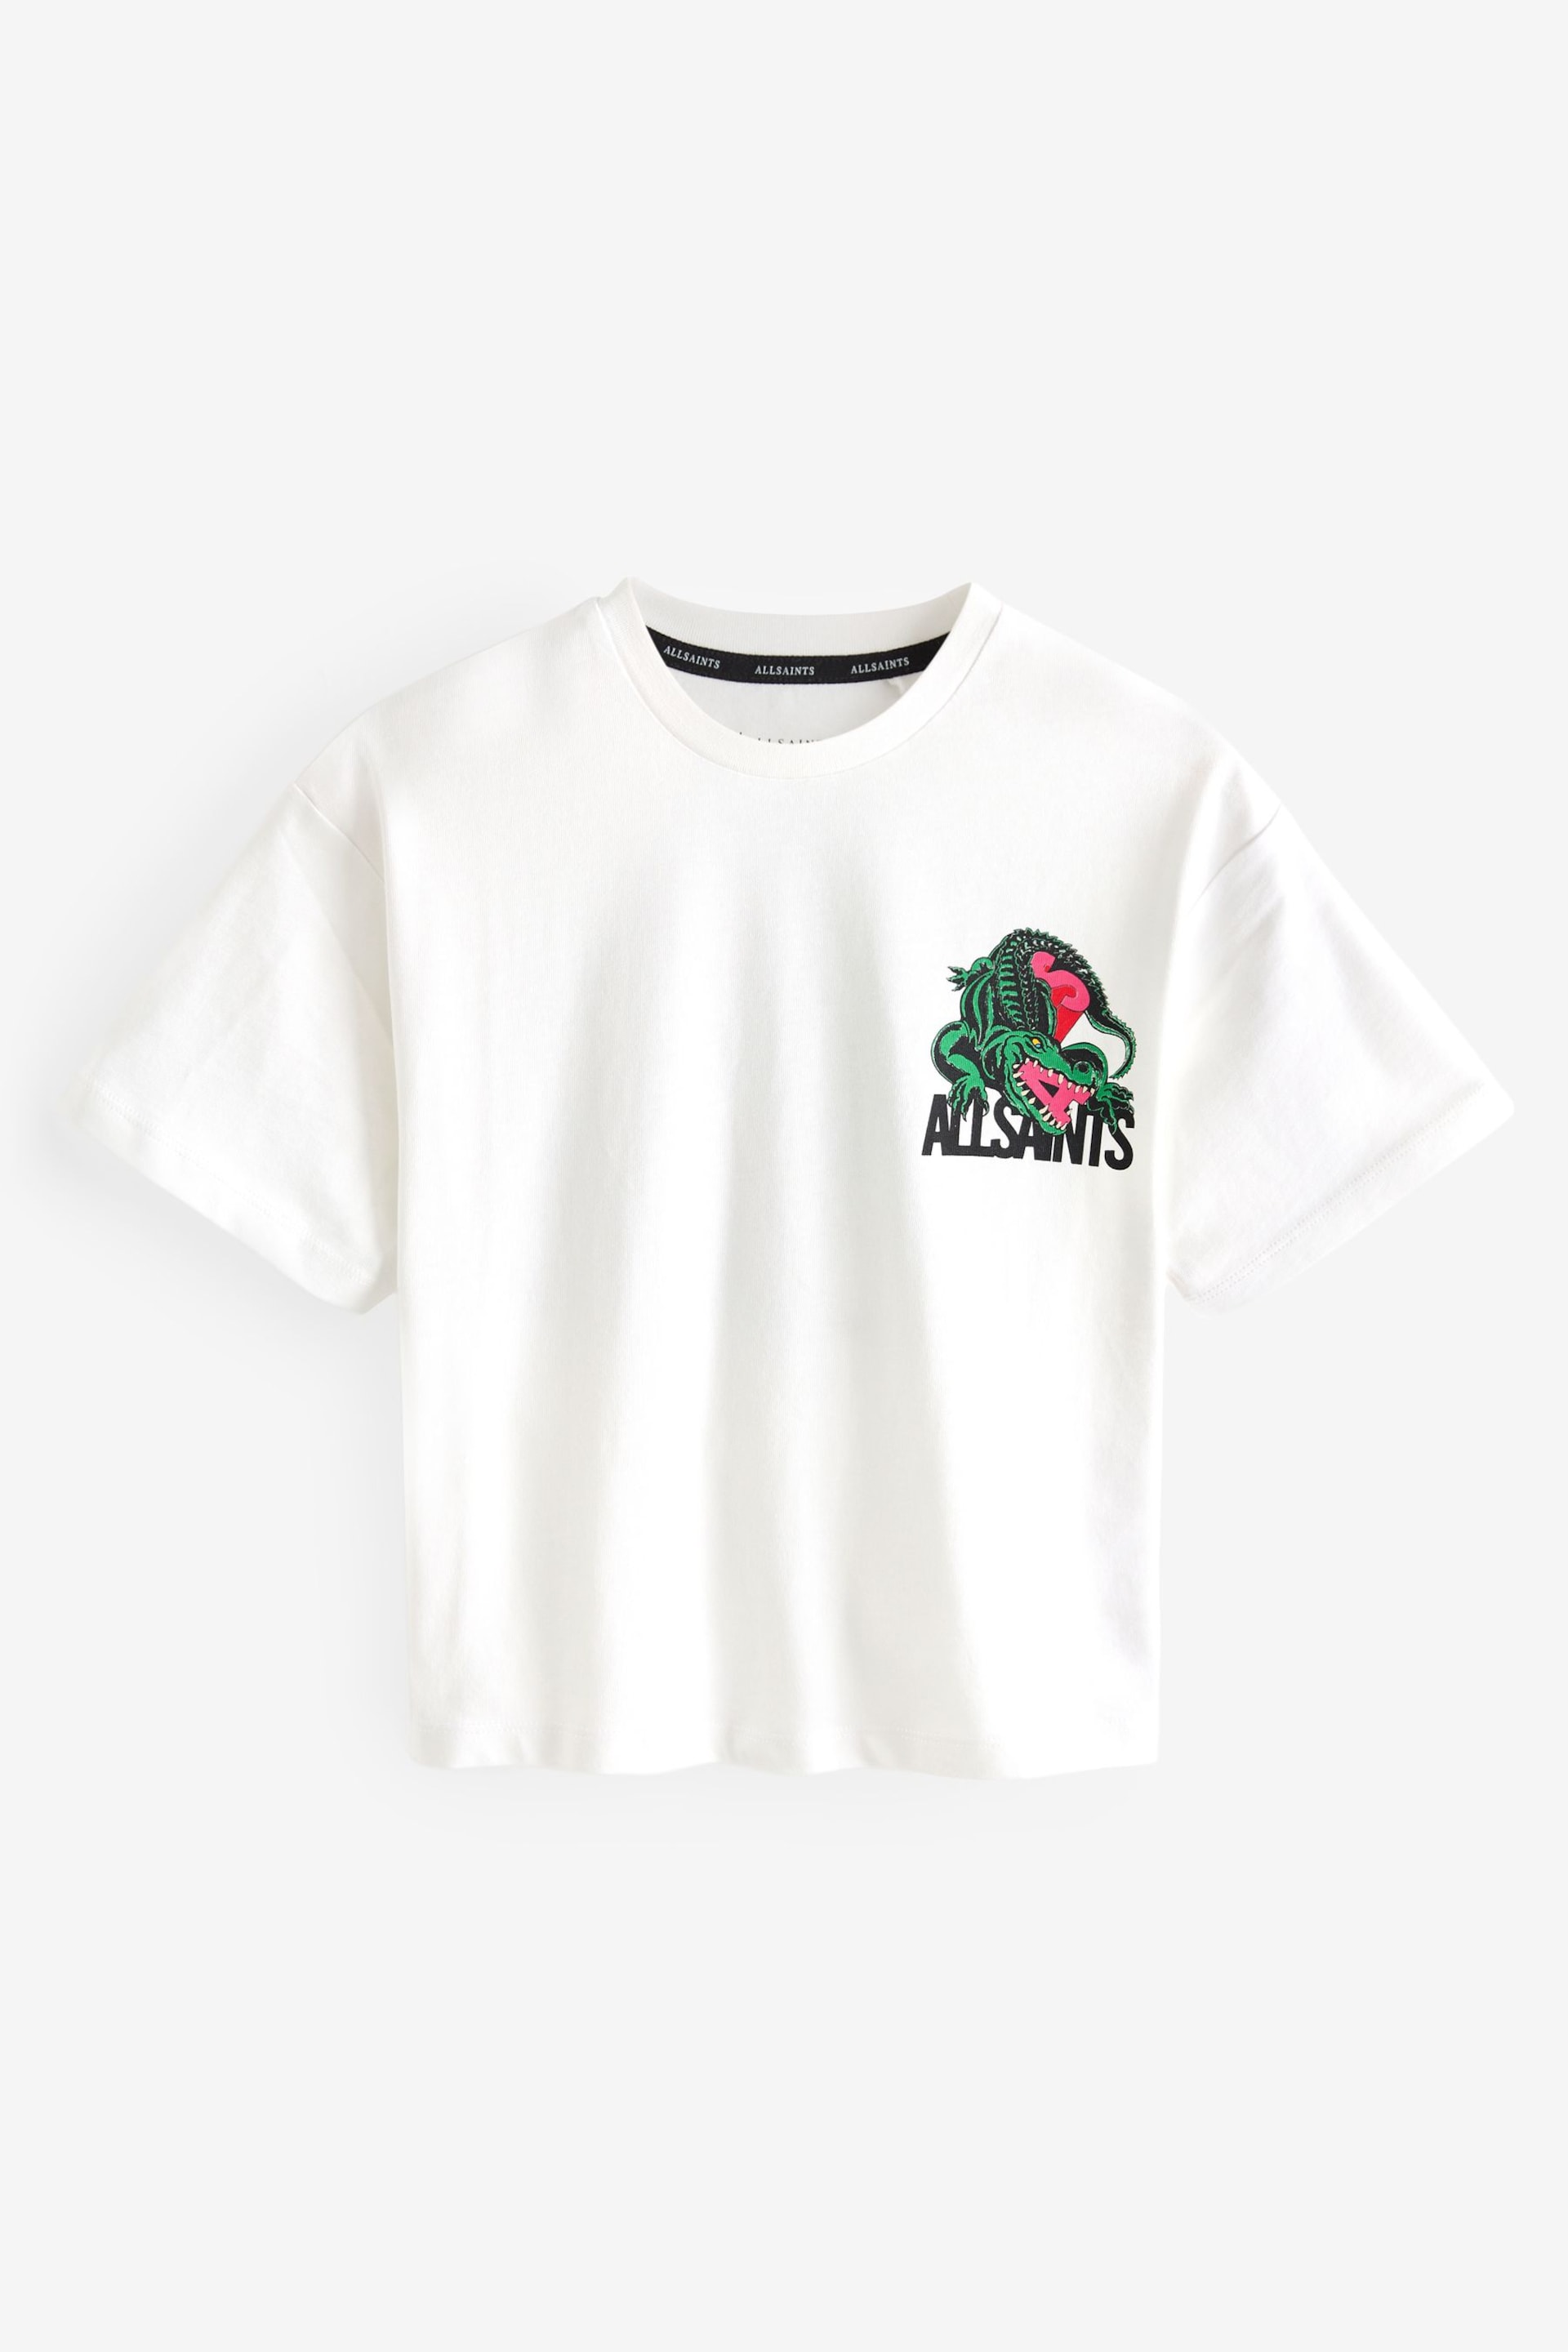 smALLSAINTS White/Gator Boys Graphic Oversized Crew T-Shirt - Image 5 of 8